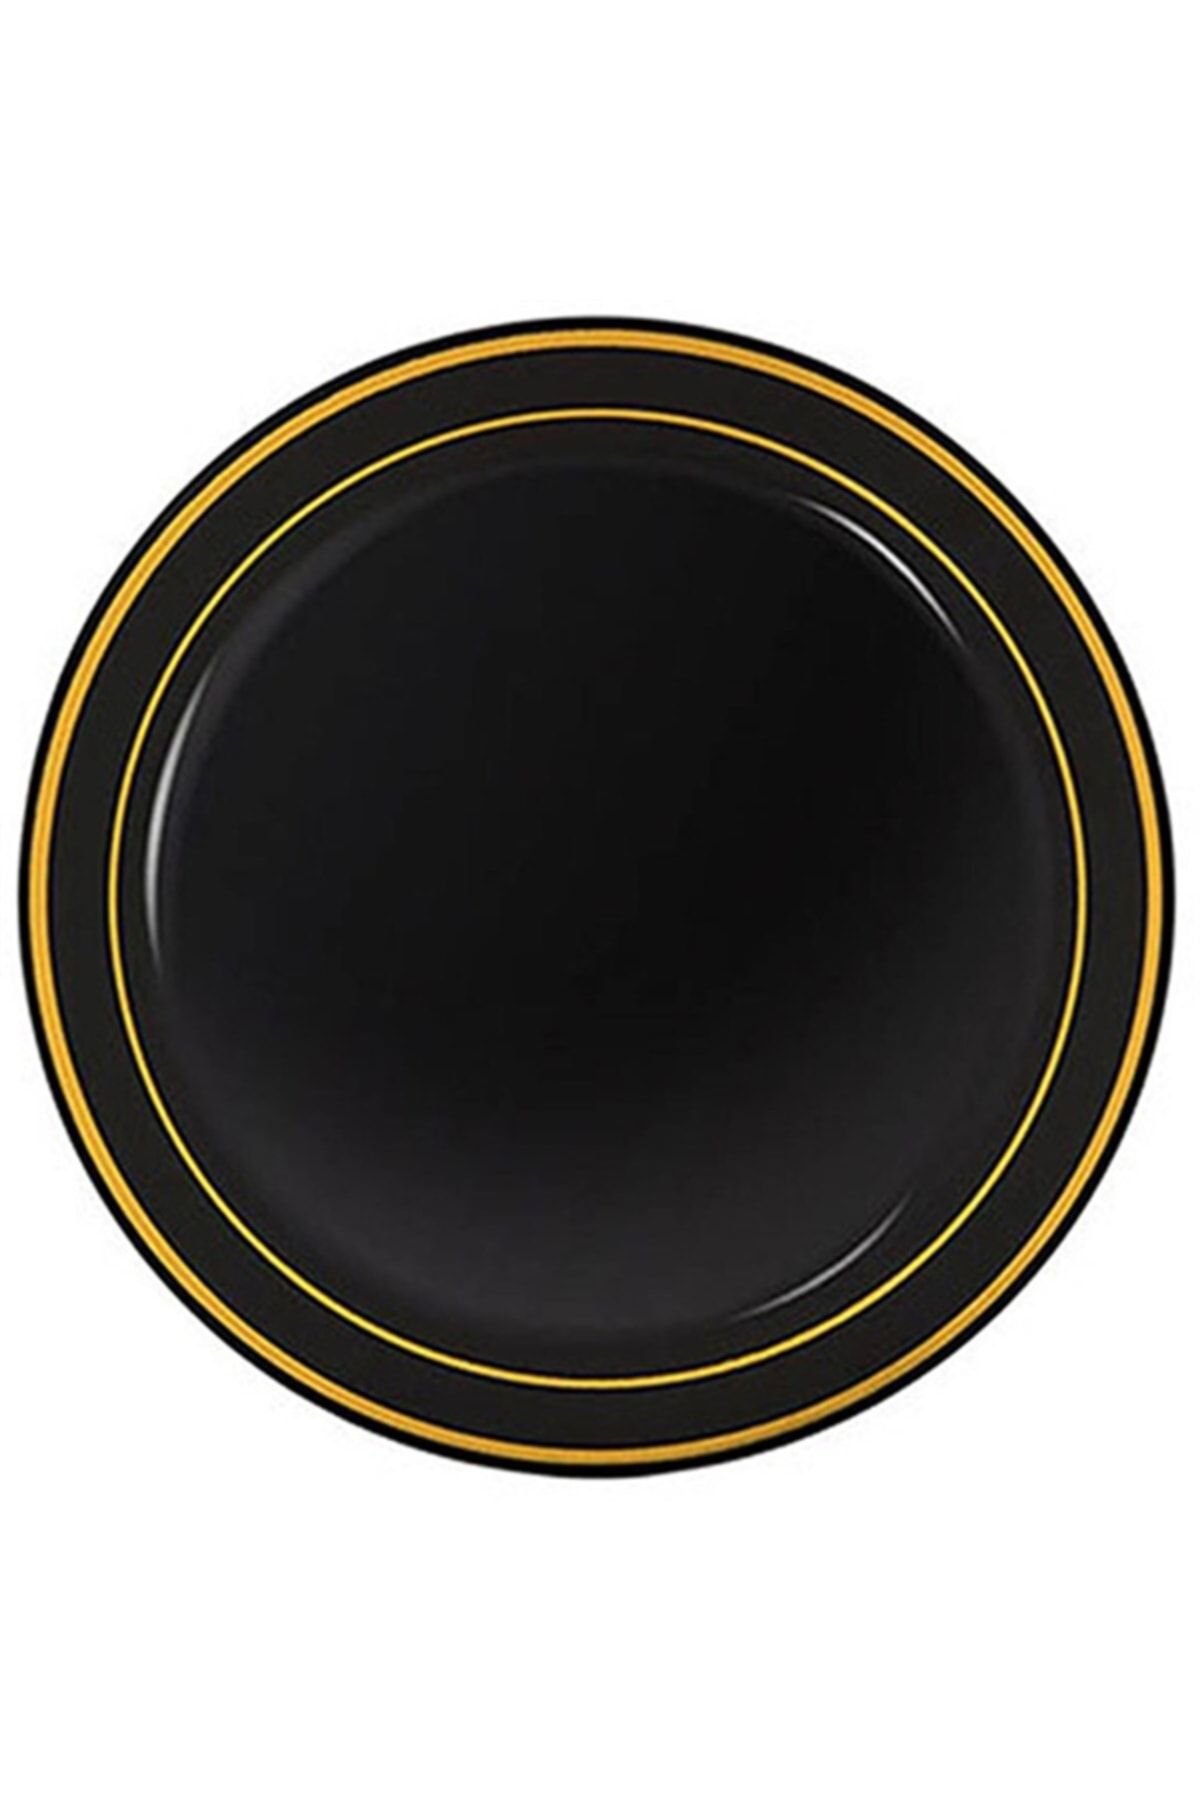 Partioutlet Altın Çizgili Siyah Mika Tabak 6 Adet 26 Cm